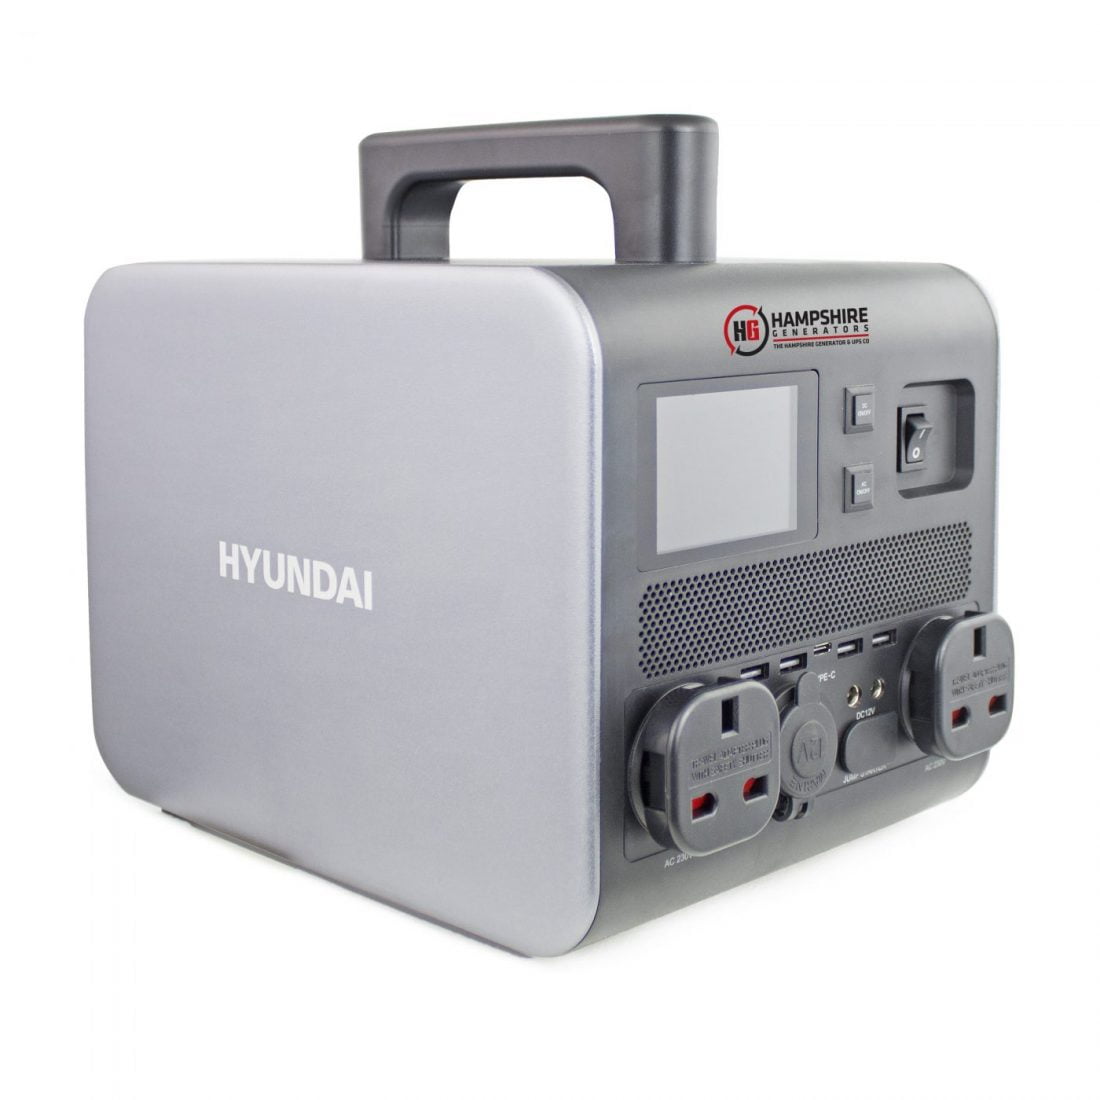 Hyundai HPS-300 300W Portable Power Station